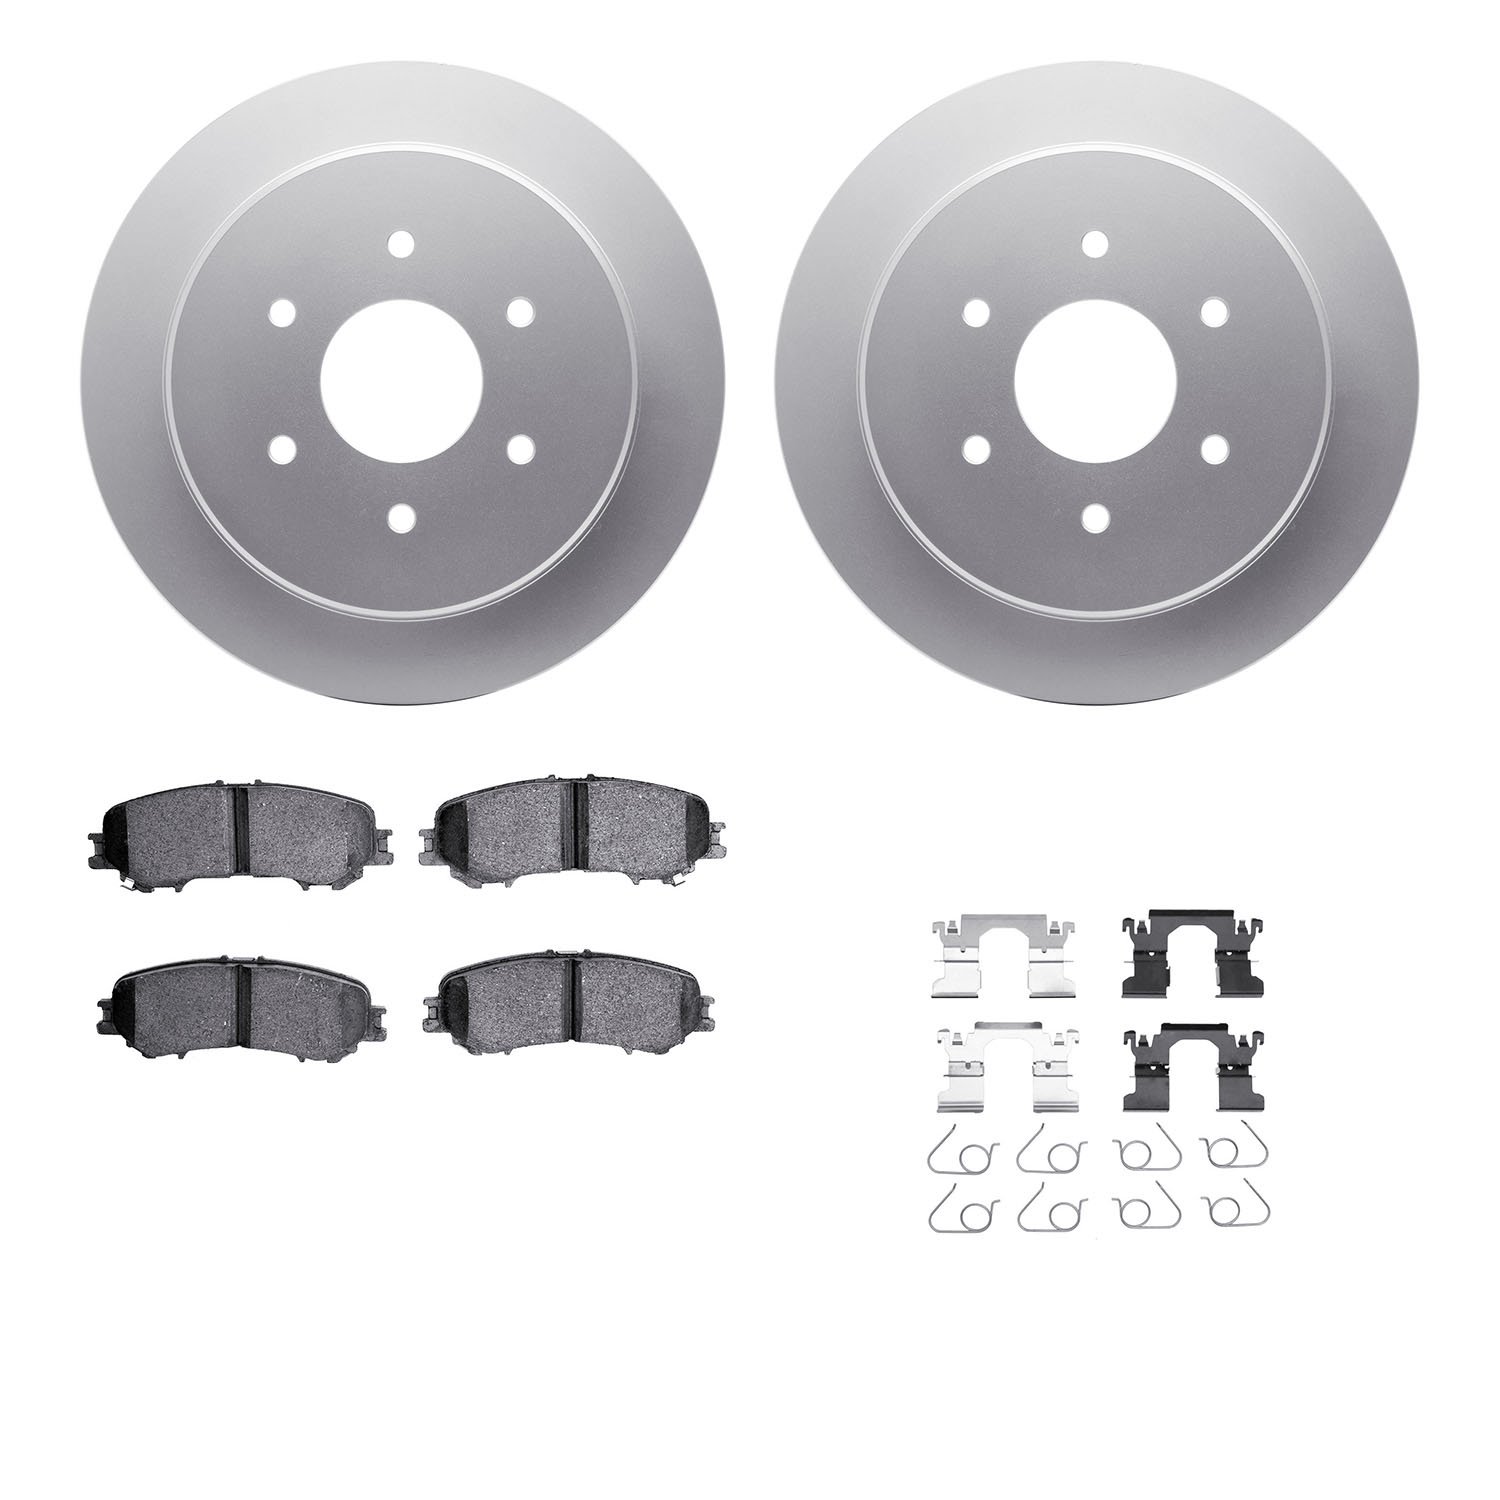 4412-67010 Geospec Brake Rotors with Ultimate-Duty Brake Pads & Hardware, Fits Select Infiniti/Nissan, Position: Rear